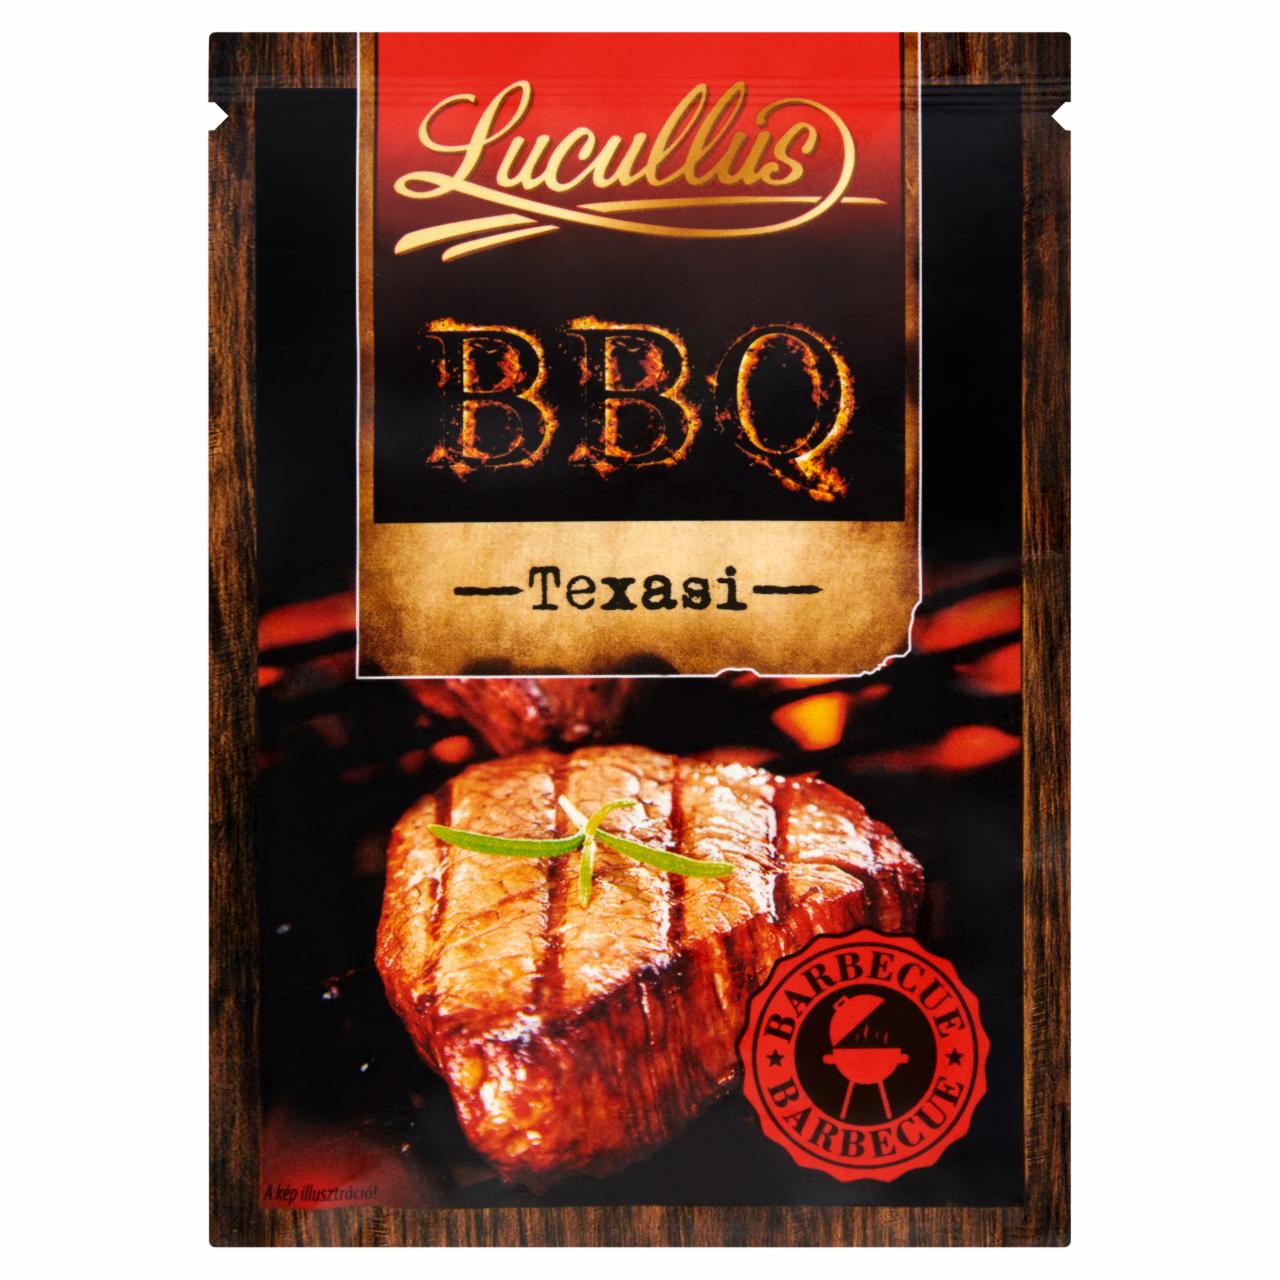 Képek - Lucullus BBQ texasi fűszerkeverék 36 g